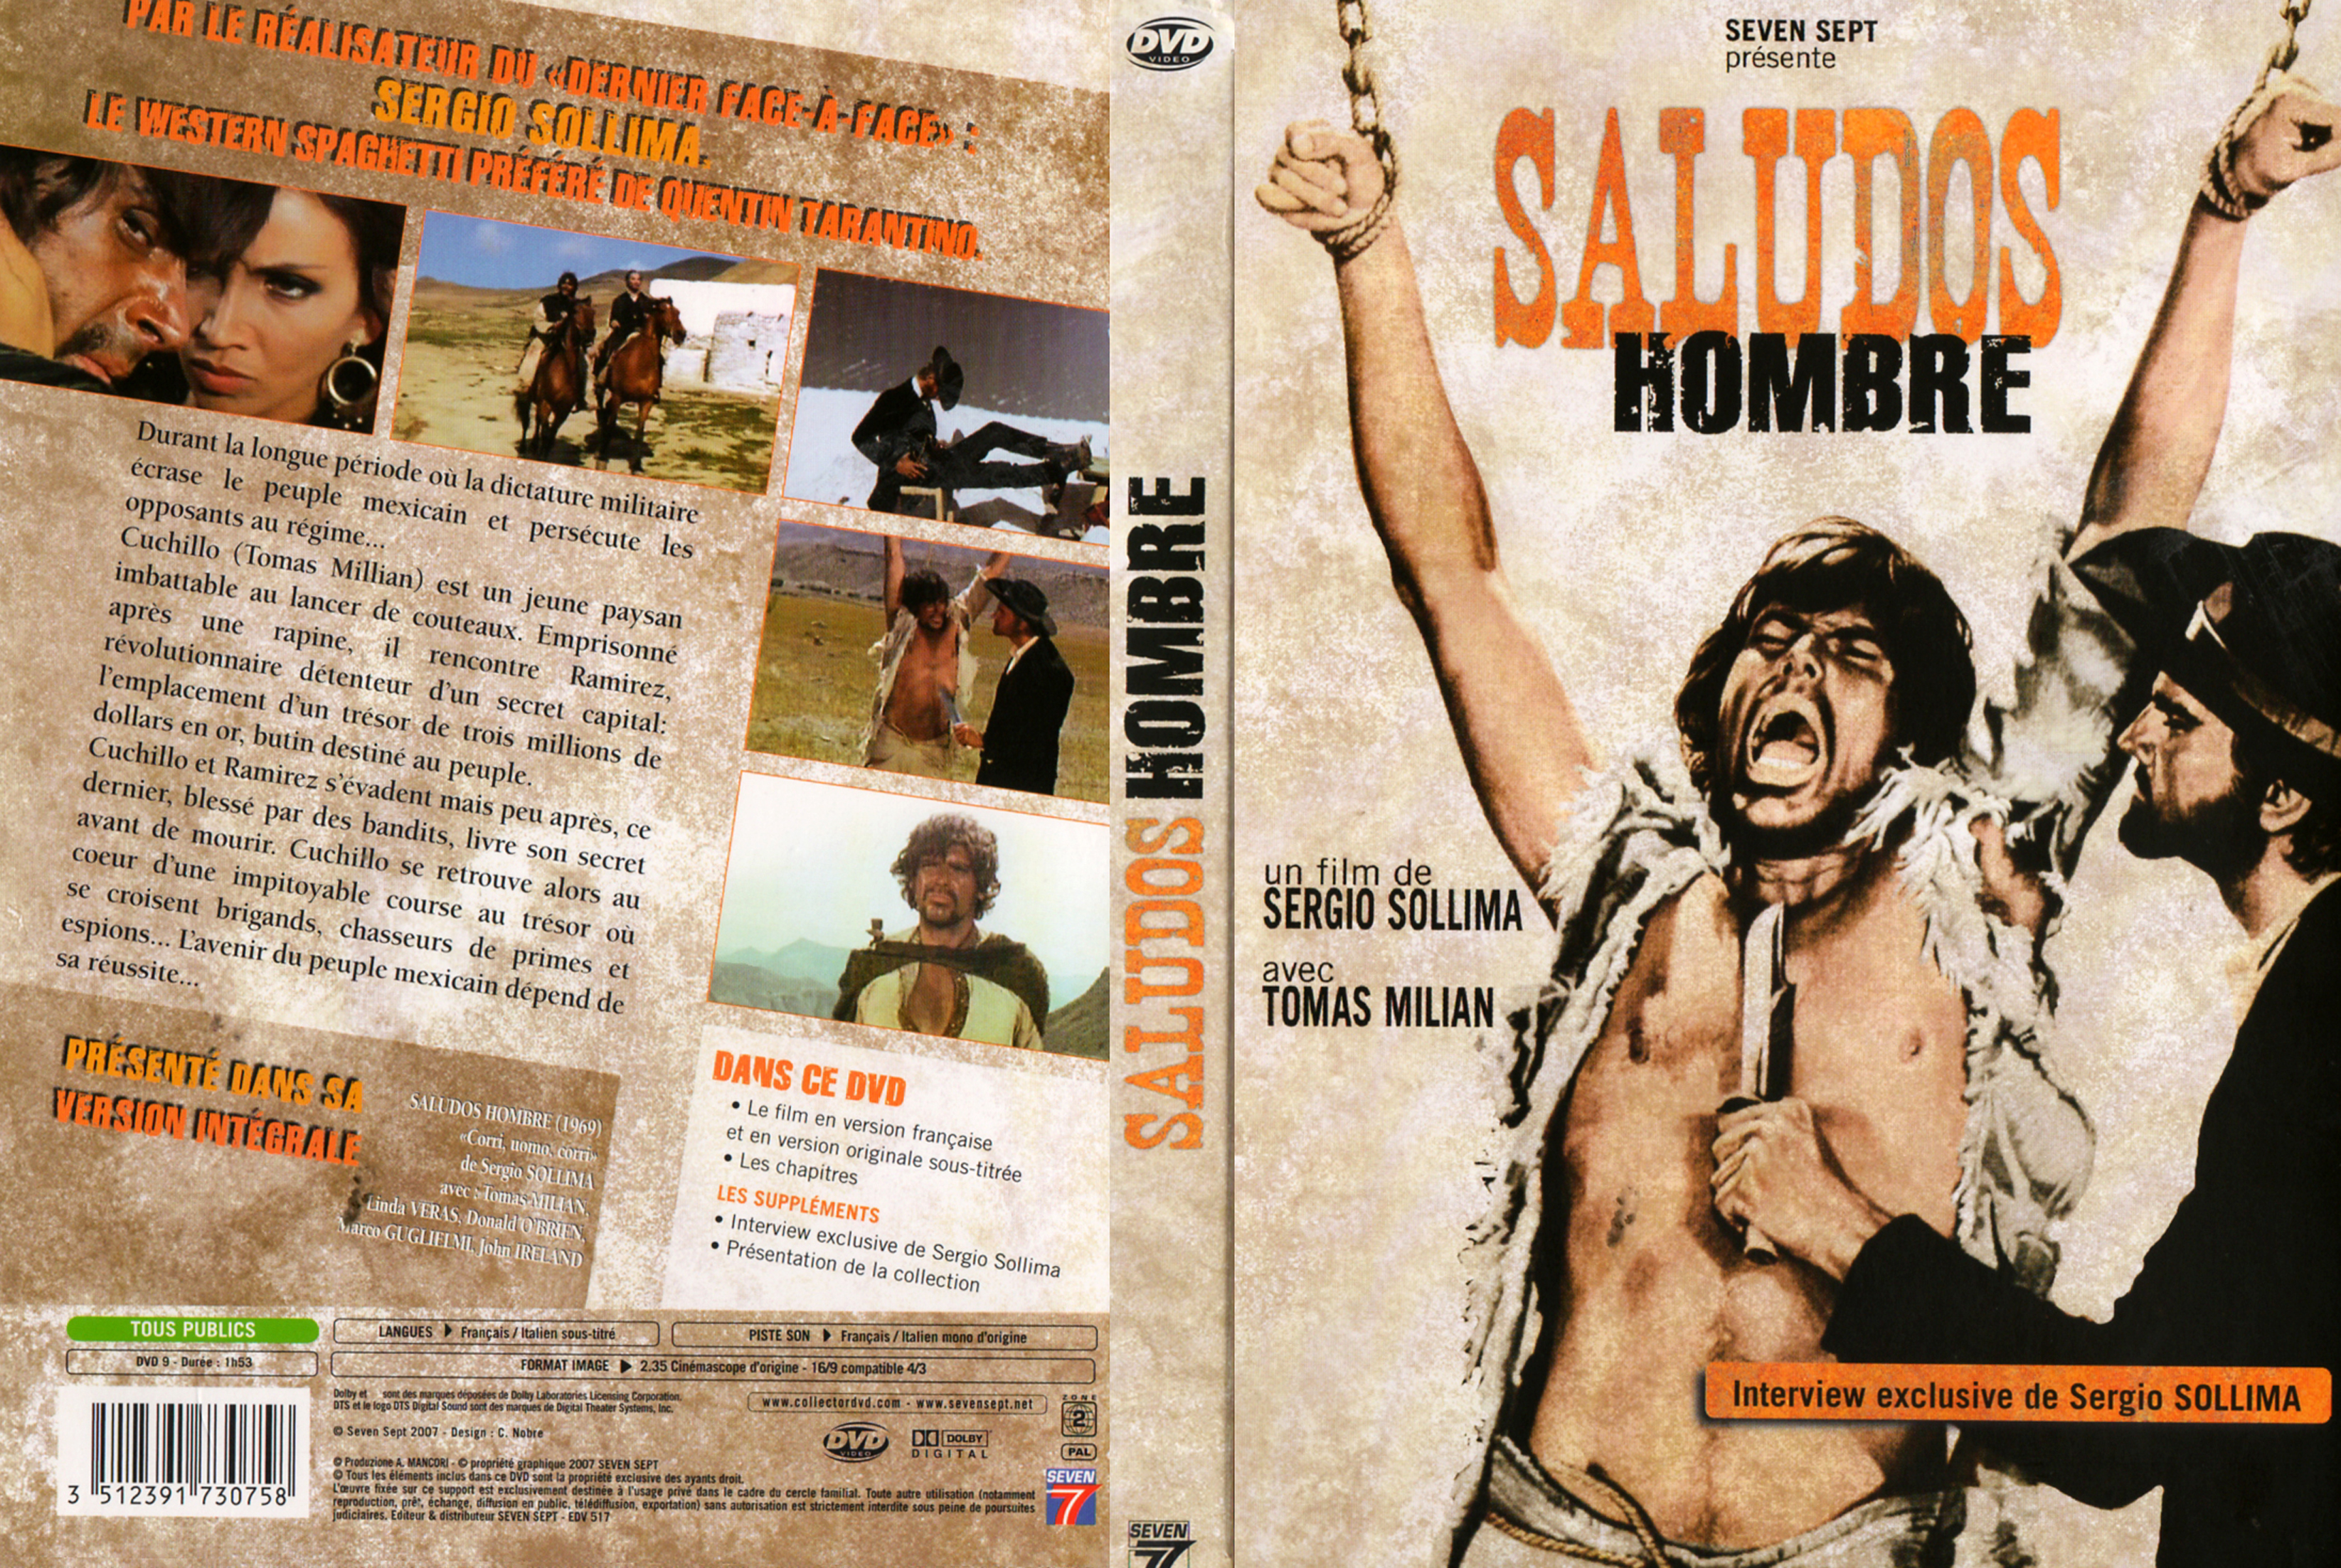 Jaquette DVD Saludos hombre v2